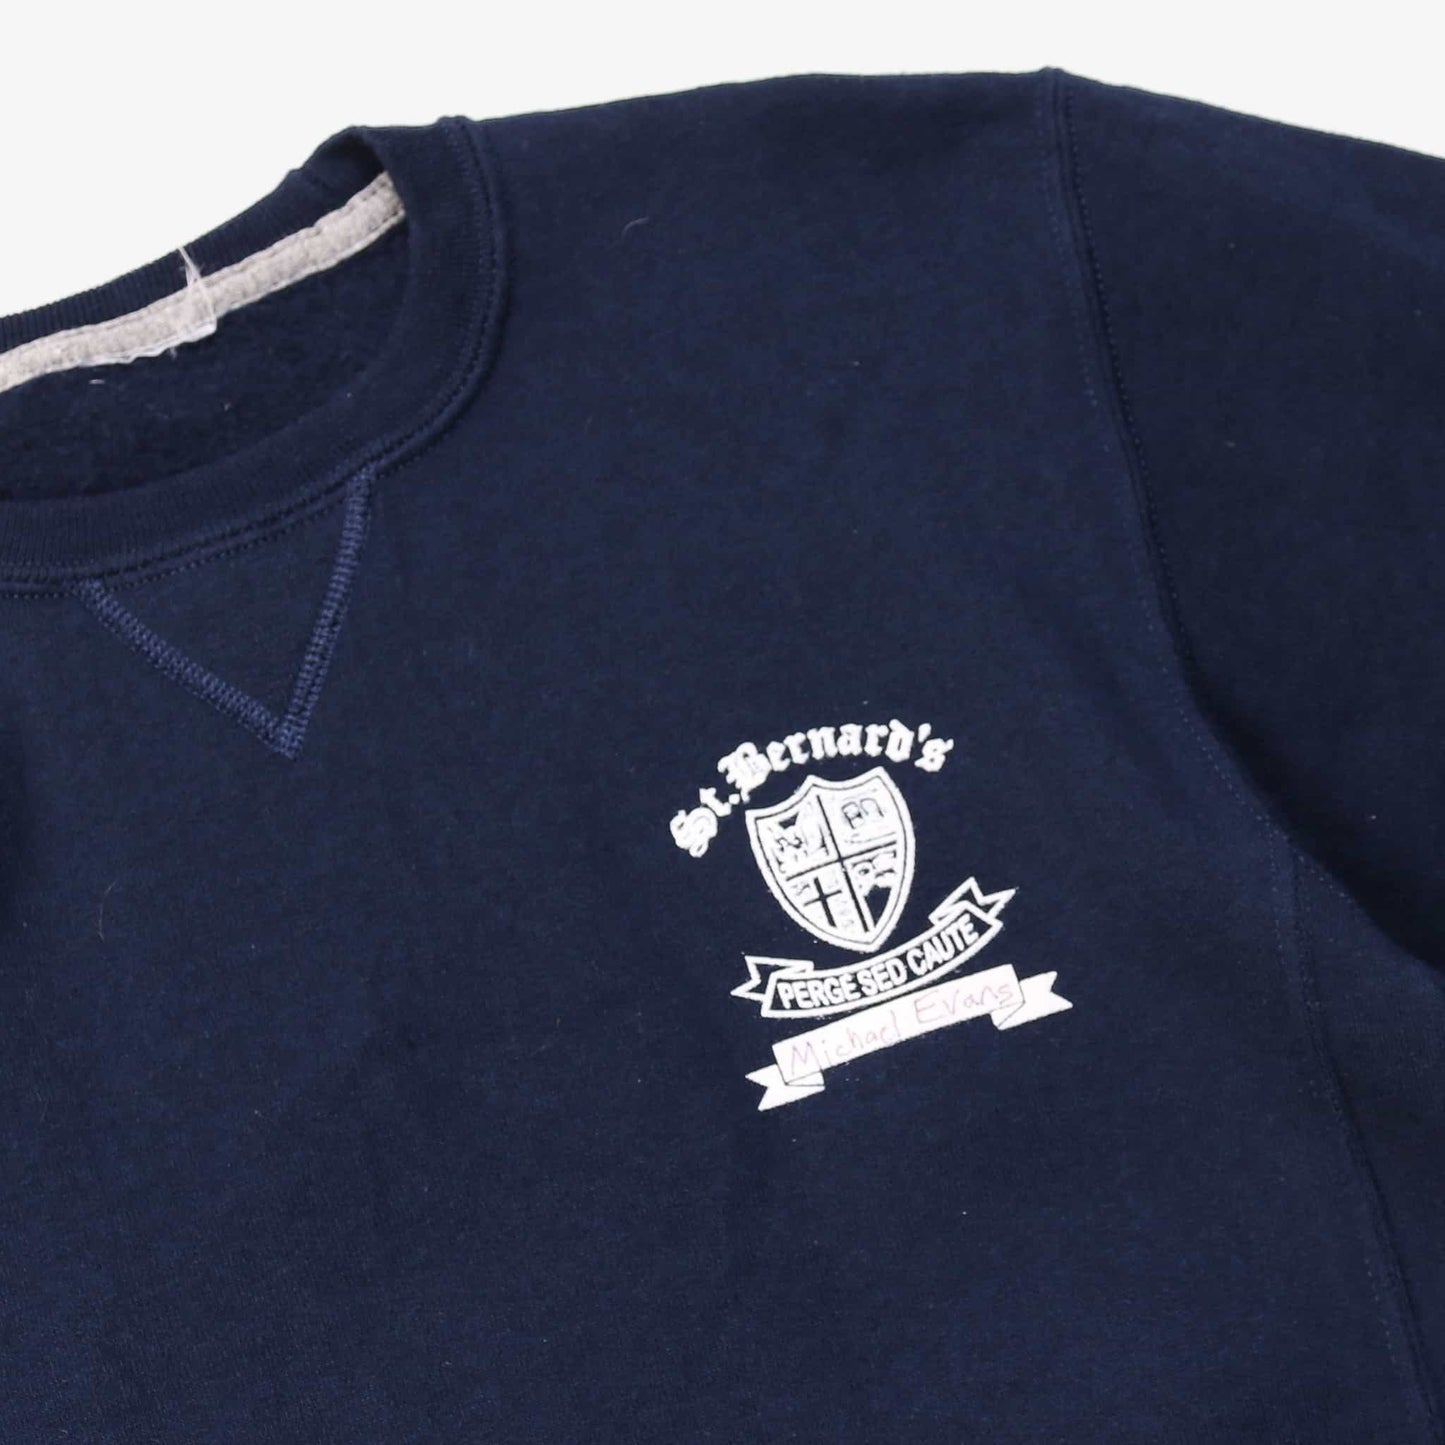 'St.Bernards' Sweatshirt - American Madness